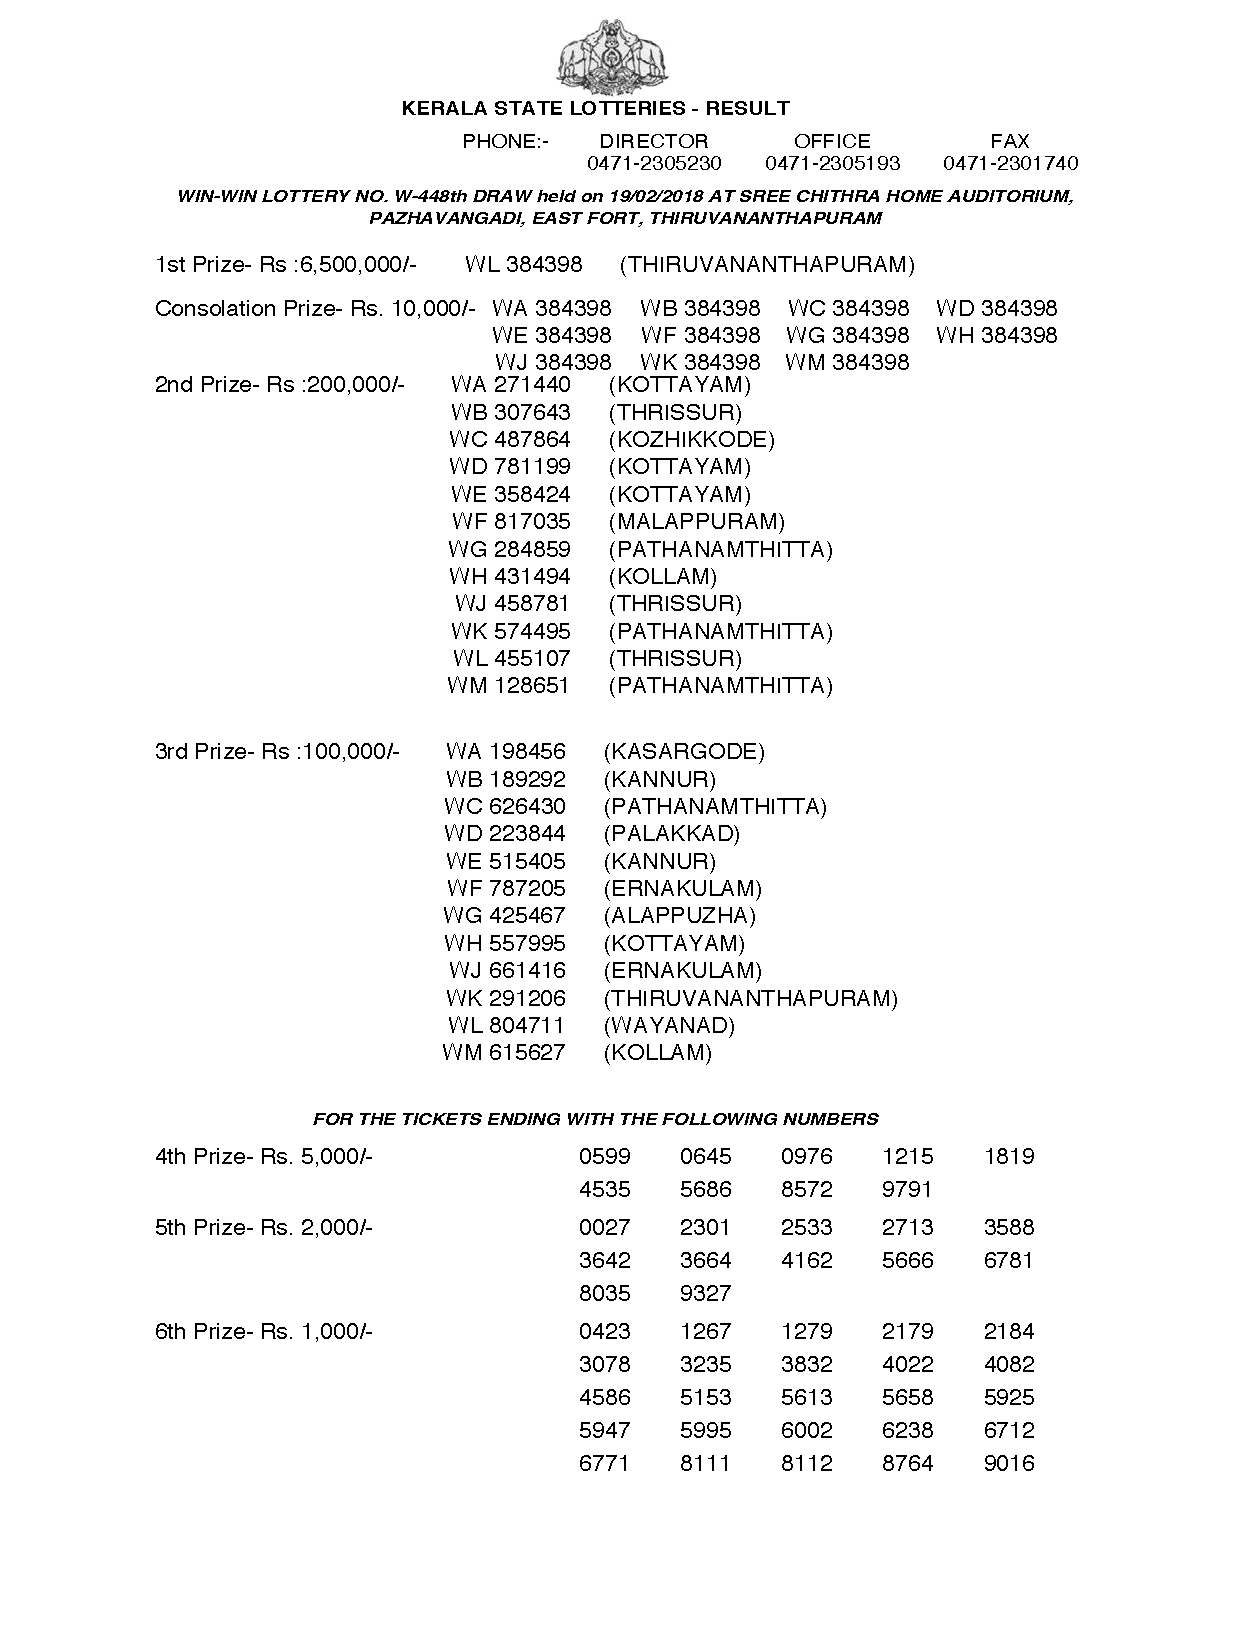 Download Winwin W448 Kerala Lottery Results Screenshot: Page 1